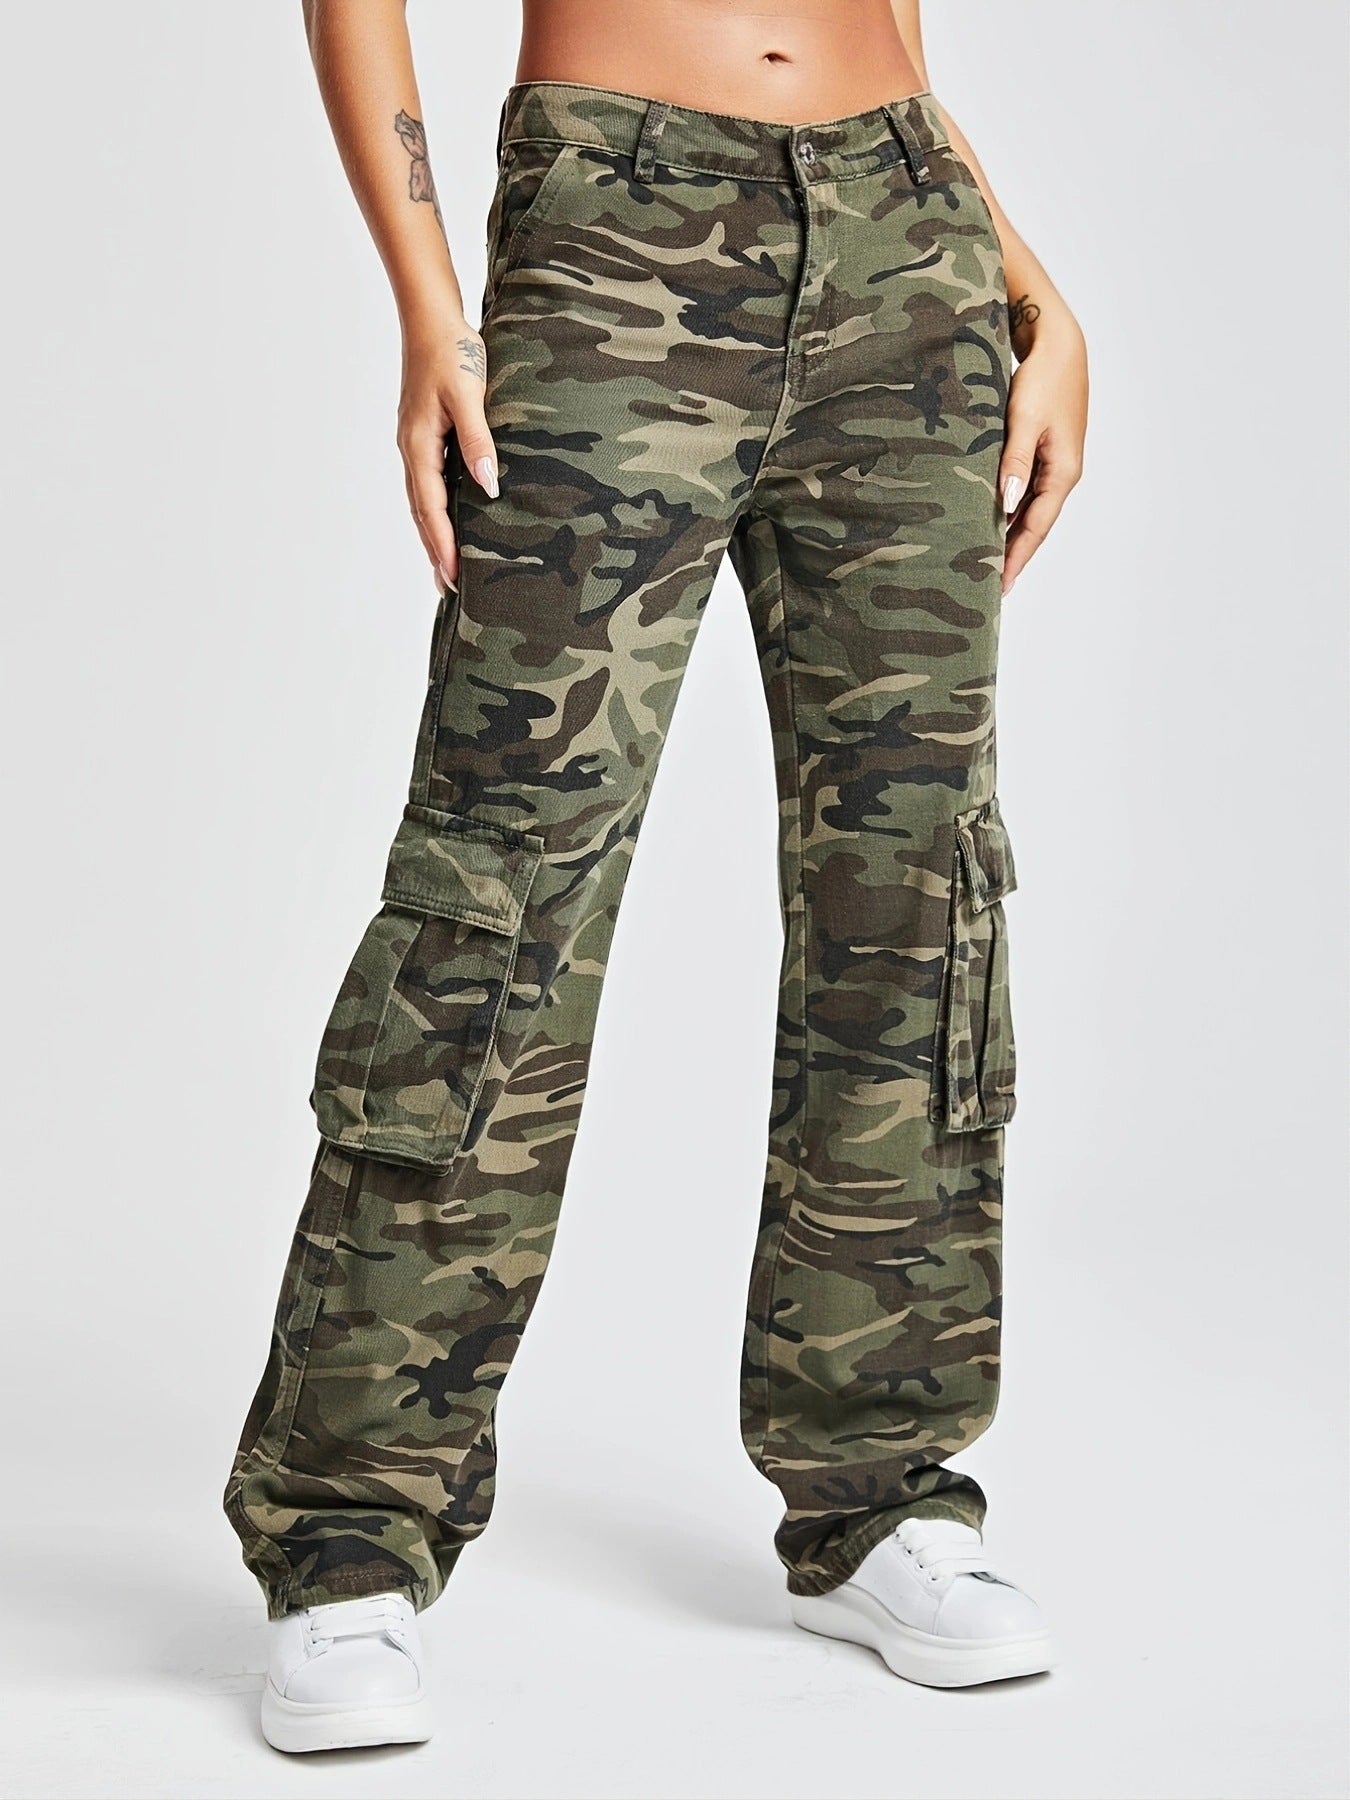 FZ Women's Camouflage Cargo Denim Pants - FZwear